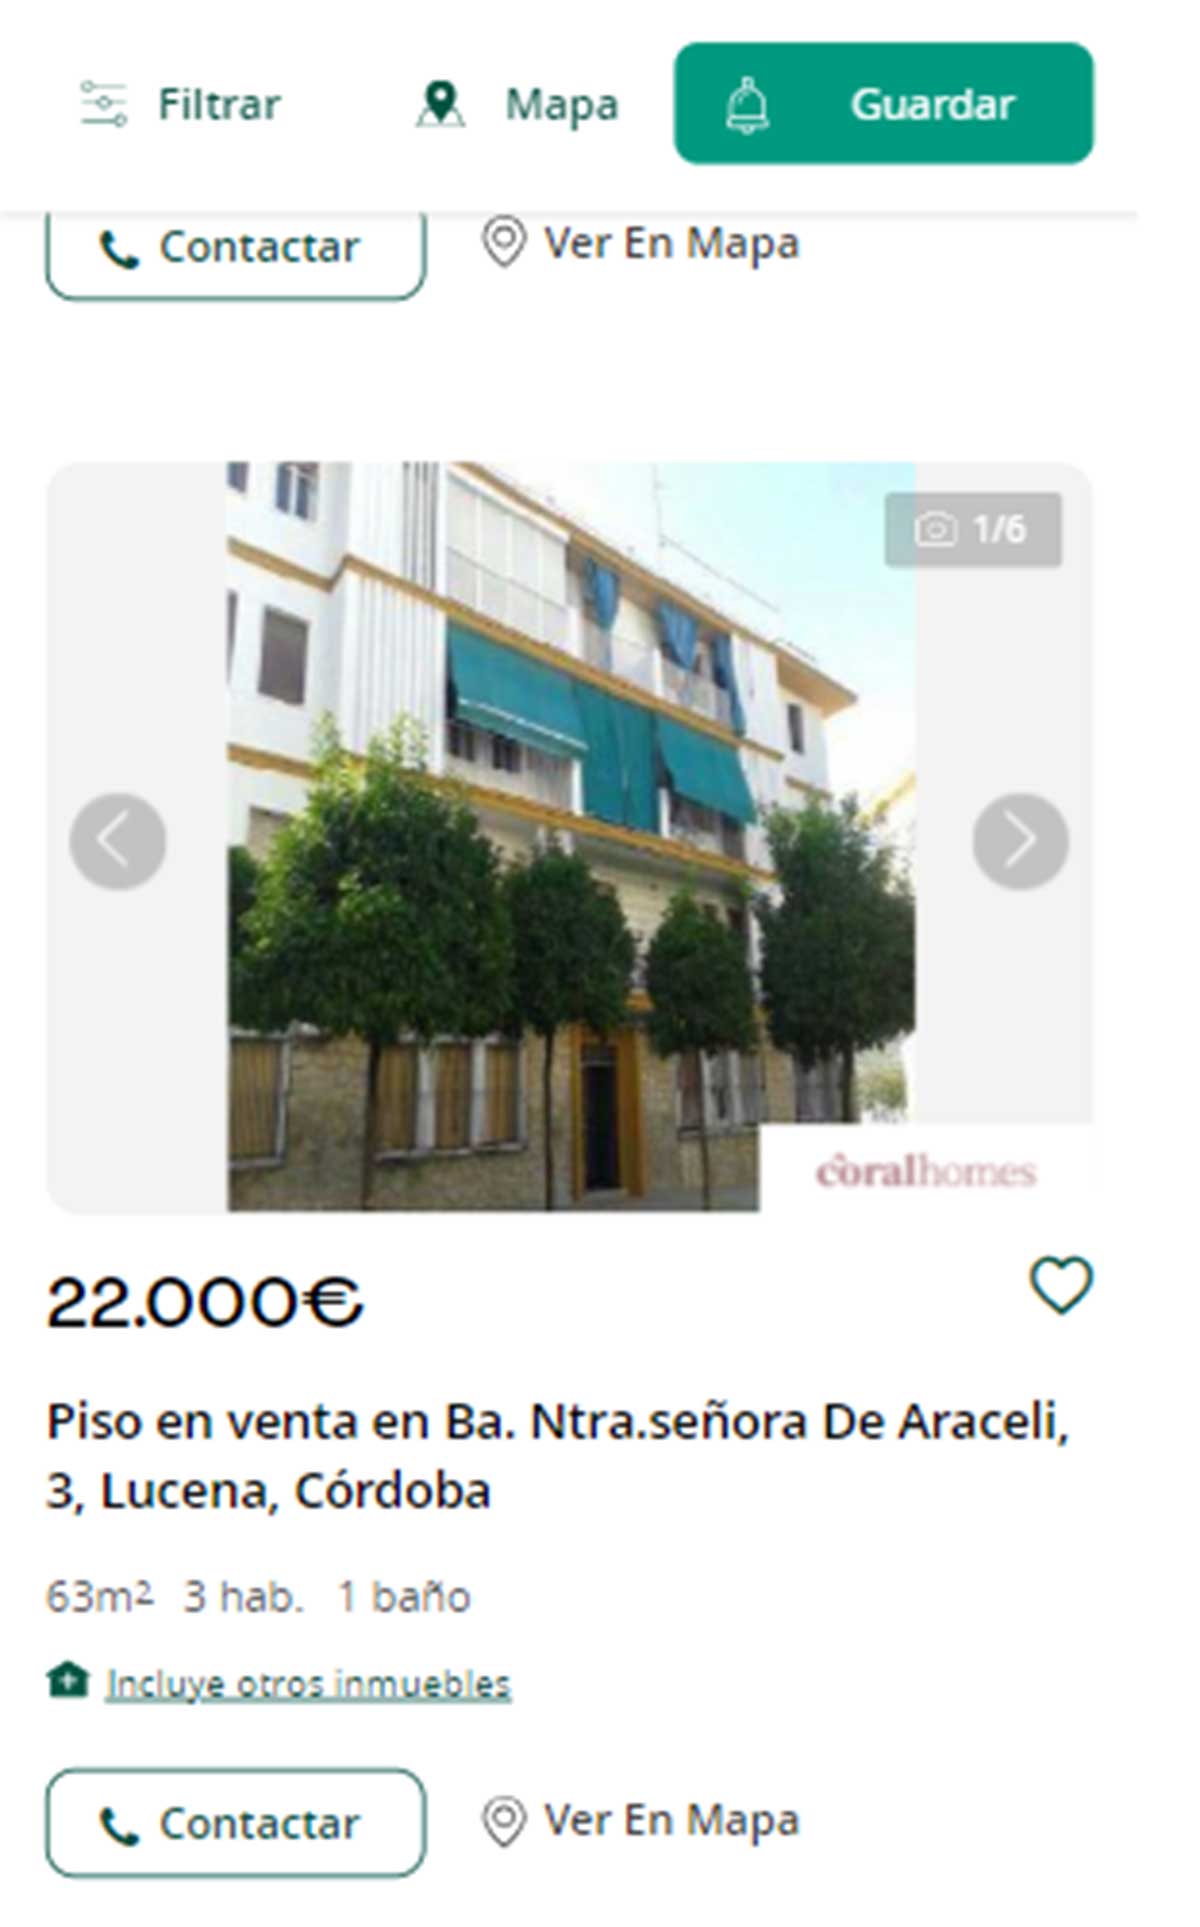 Piso a la venta en Córdoba por 22.000 euros